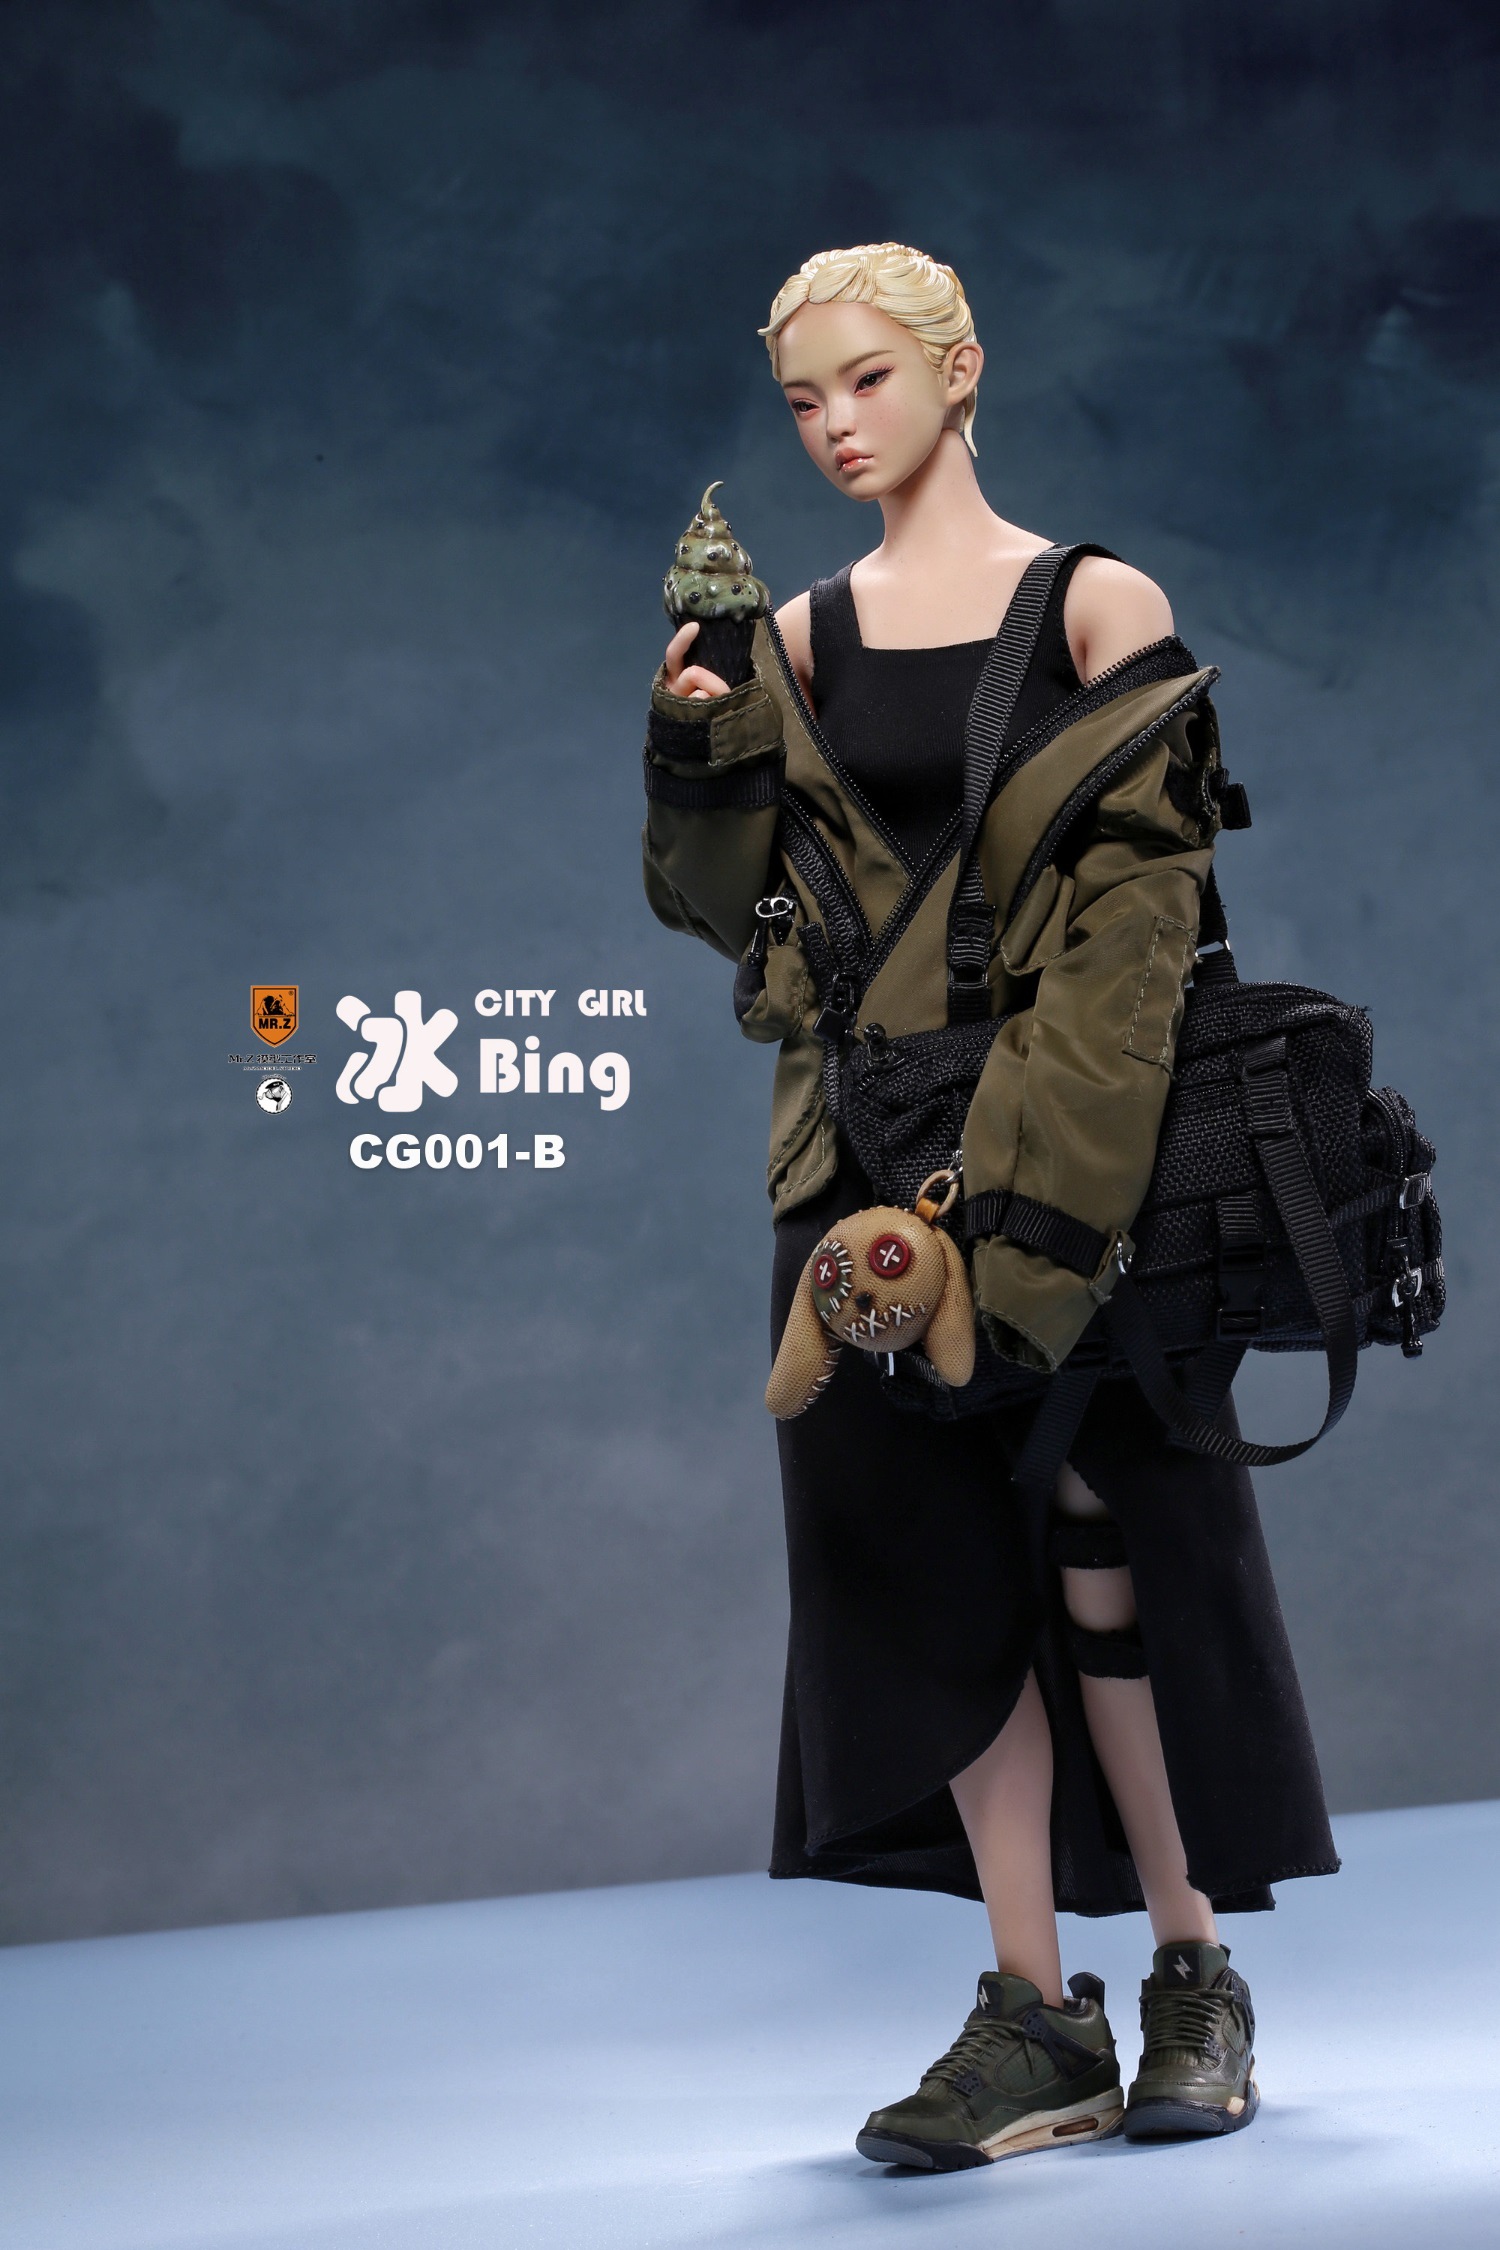 ModelStudio - NEW PRODUCT: Mr.Z model studio - city series first urban girl Mu & Bing #CG001-A/B 04125